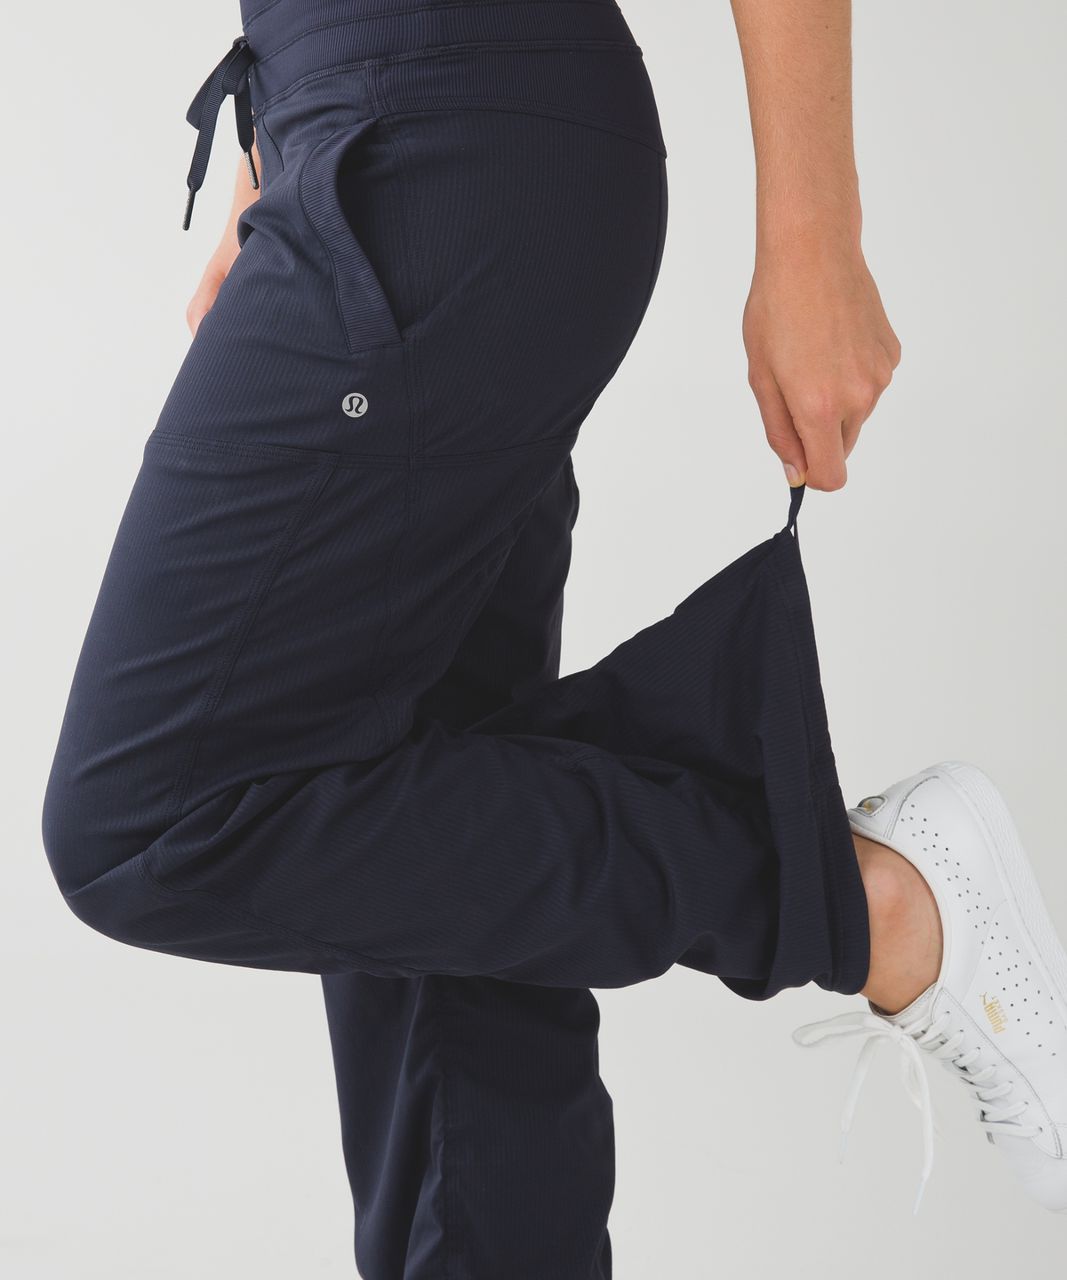 LULULEMON DANCE STUDIO Pants Navy Blue Lined Size 4 Regular $48.00 -  PicClick